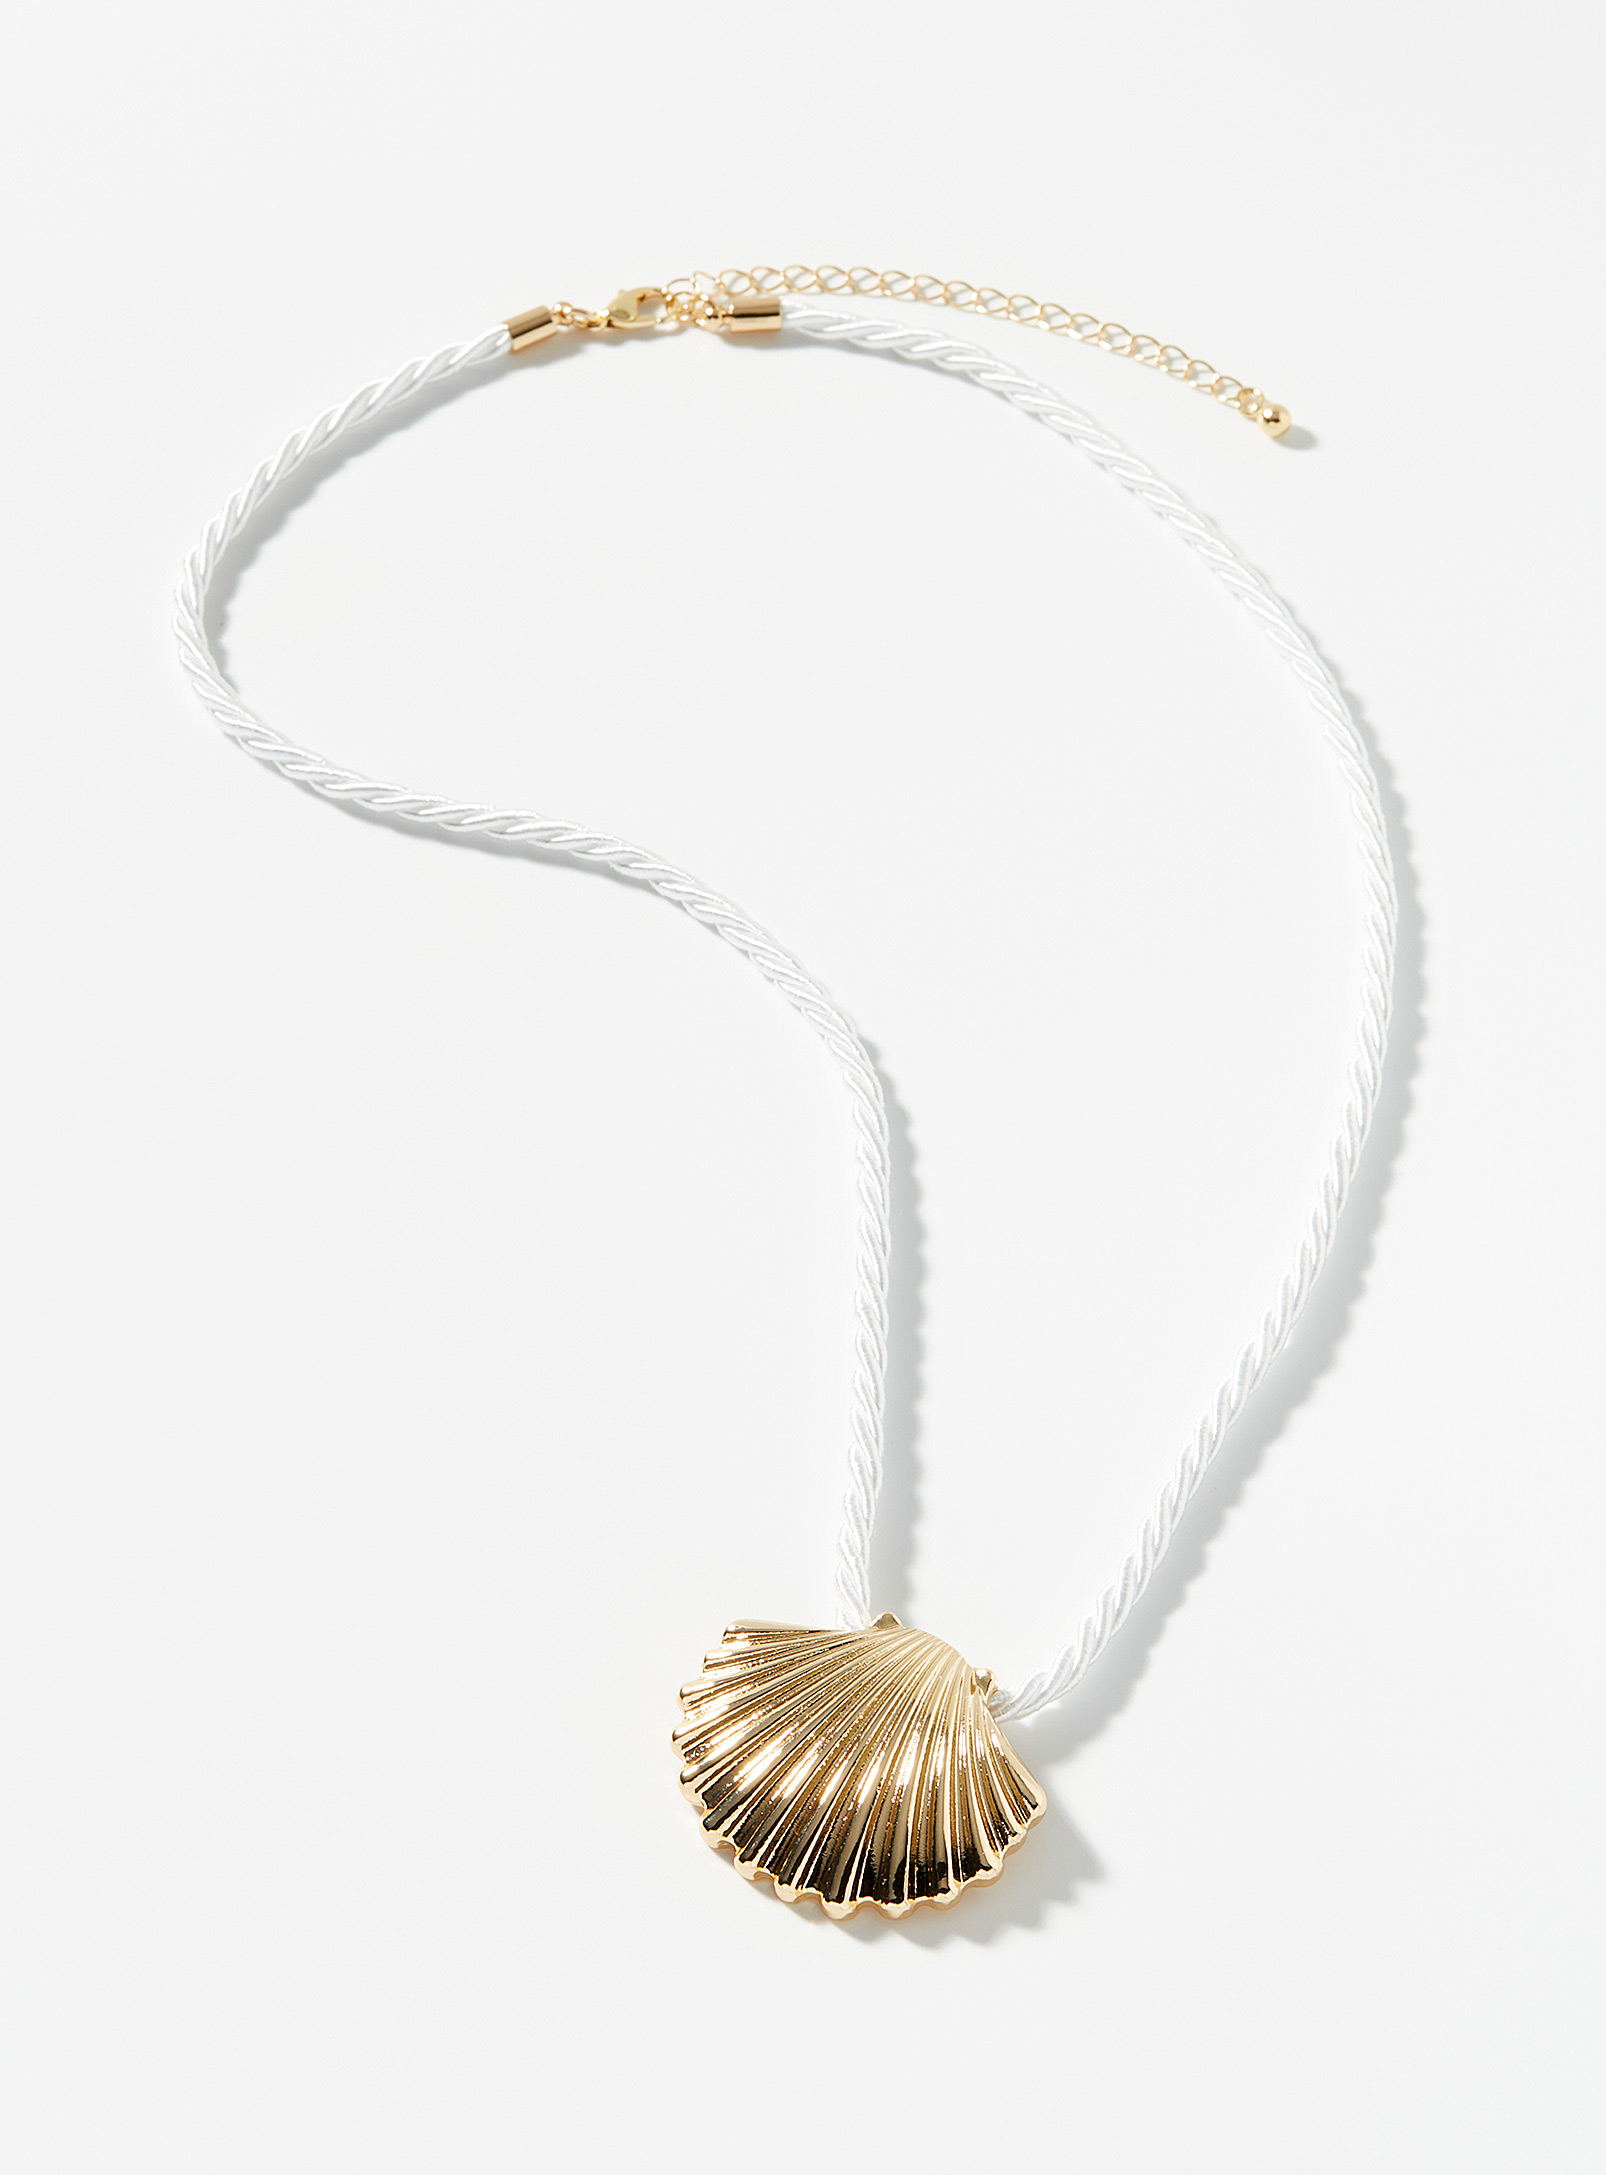 Simons - Women's Golden shell cord necklace